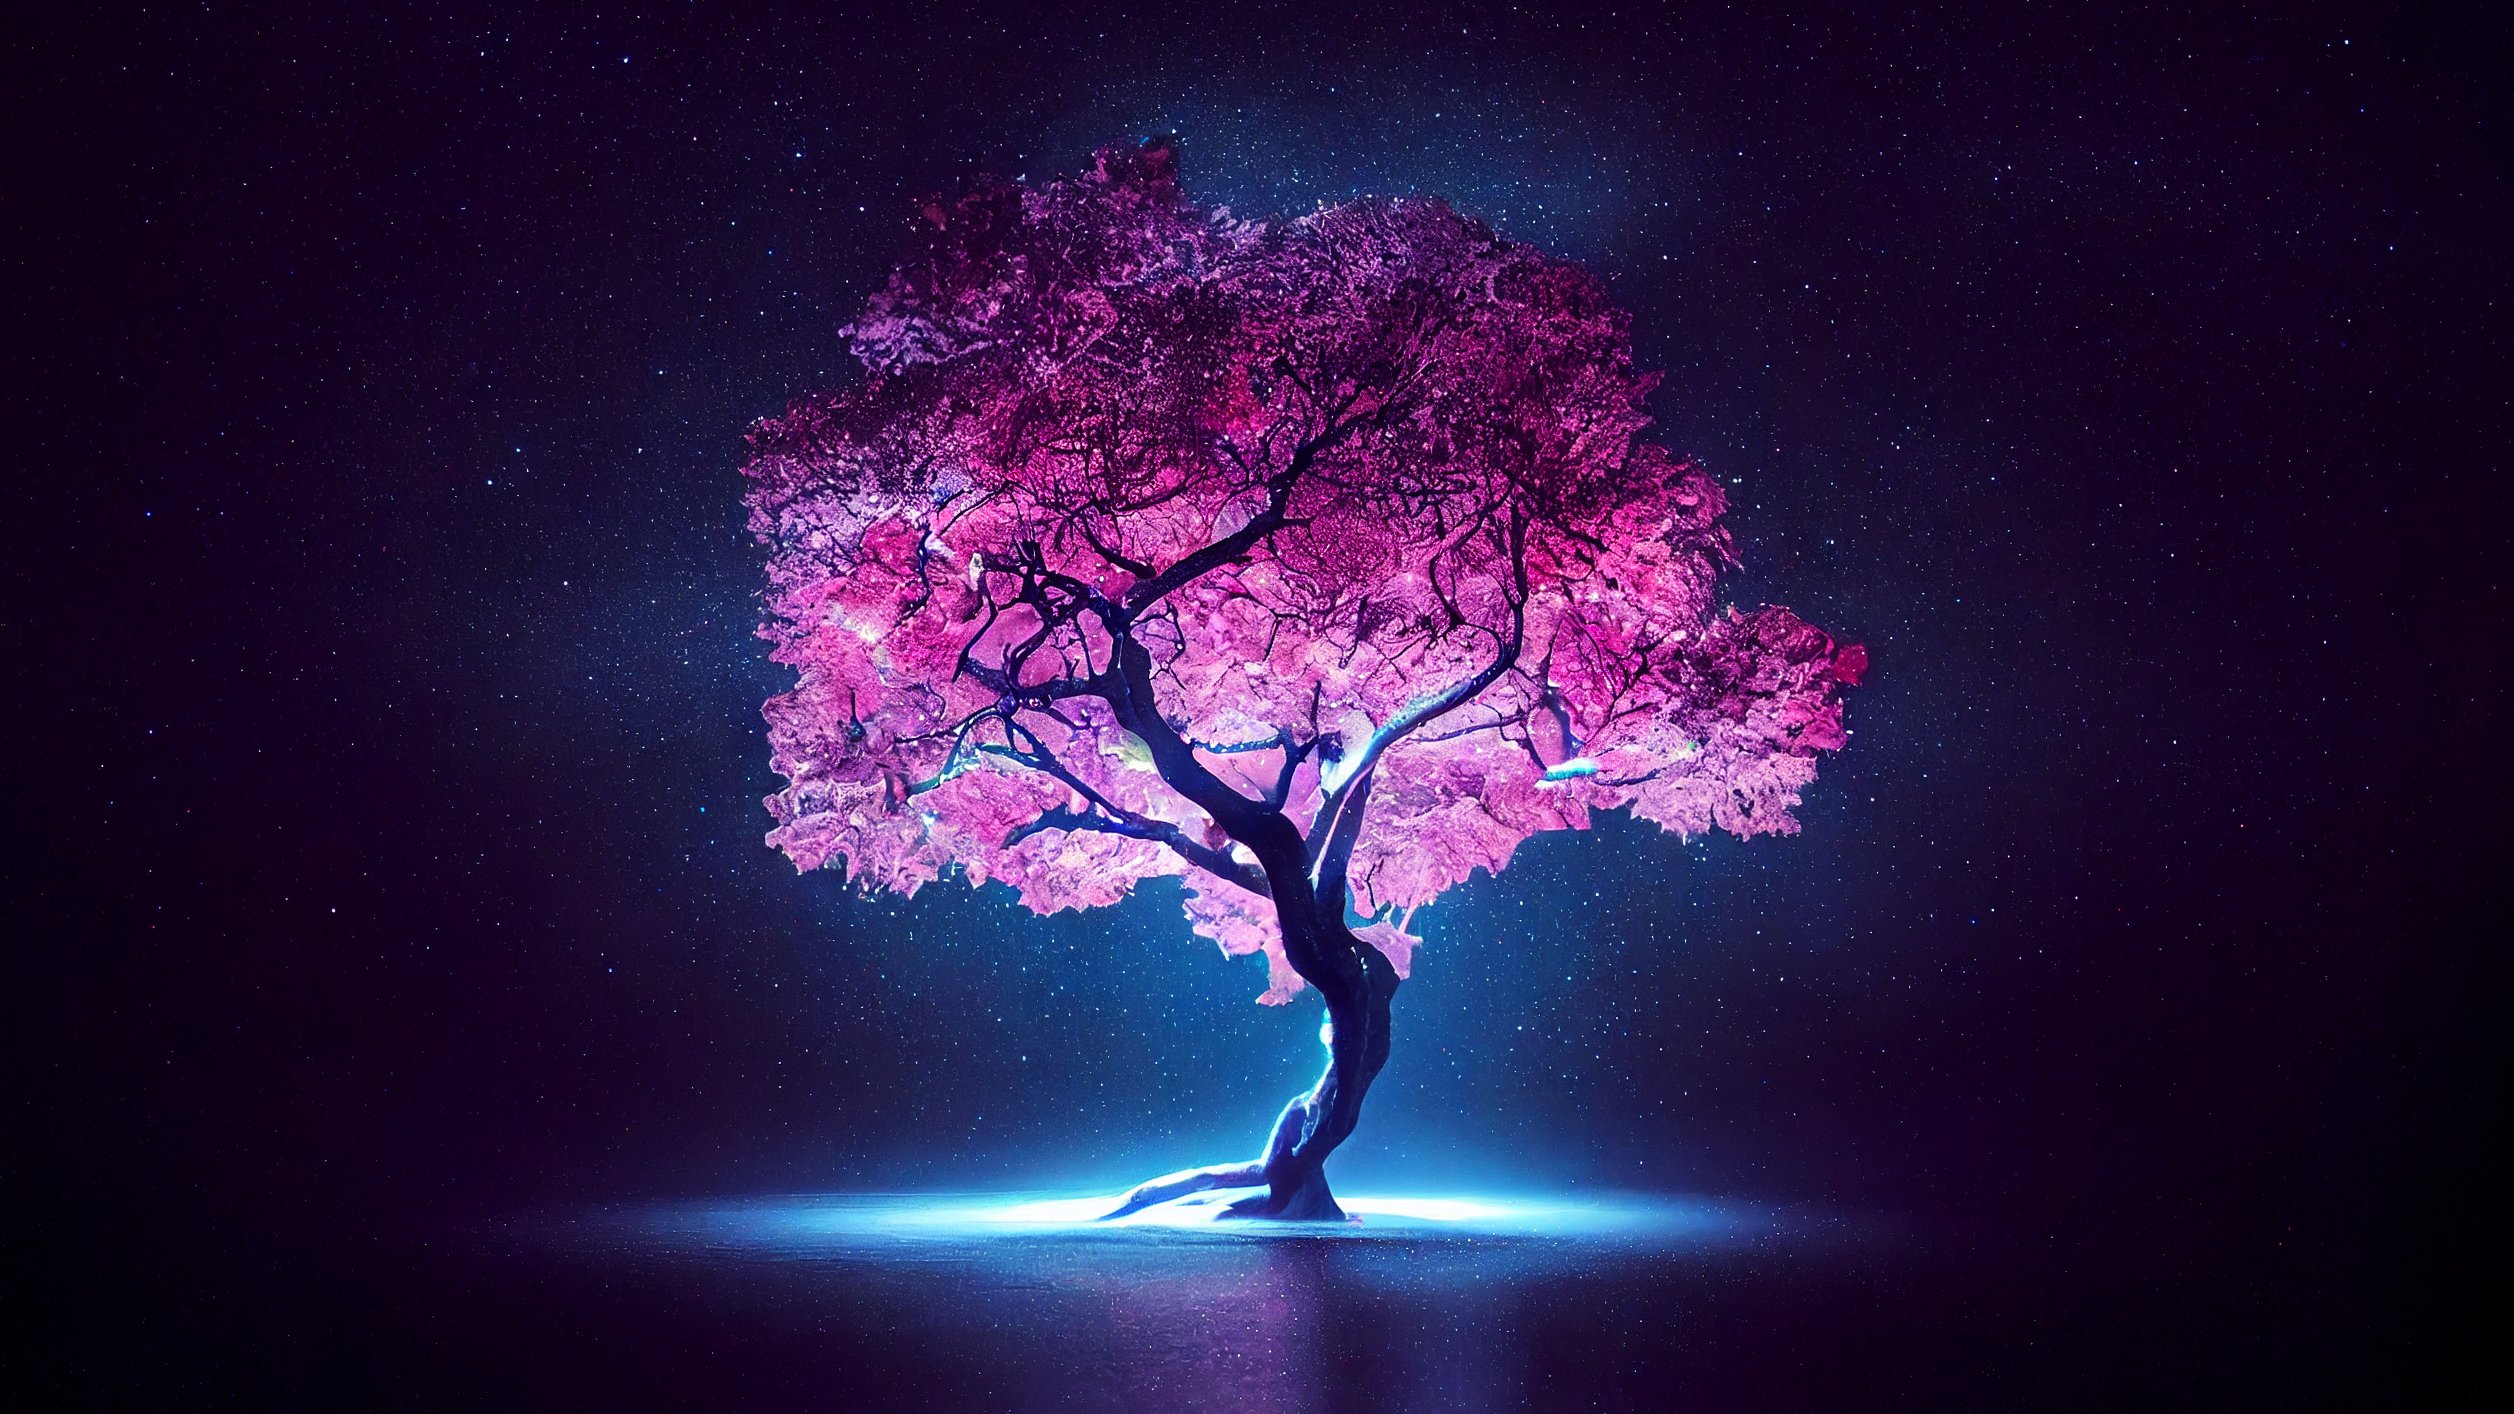 Pandora Journey on Twitter: "artwork for today's video 'Tree Of Life Vol. 2' - https://t.co/1rtV9kWIKE" Twitter